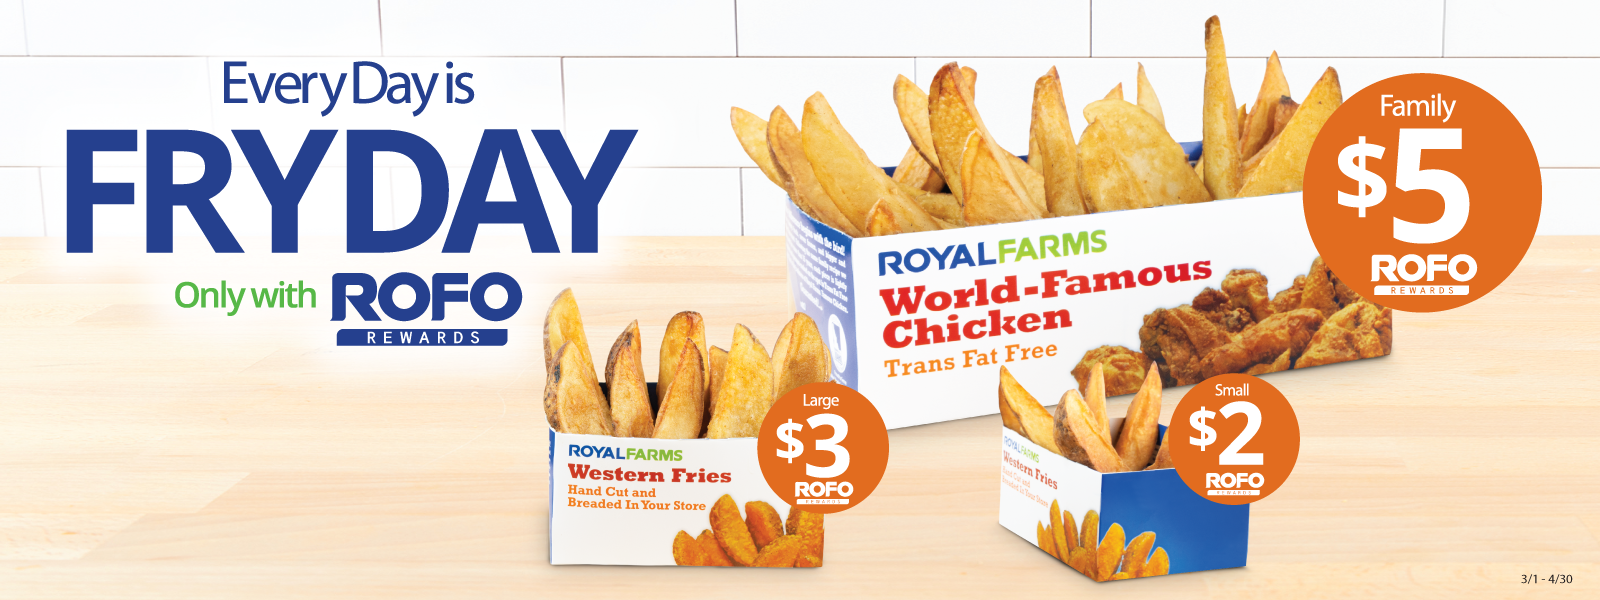 Royal Farms Promo – Fryday